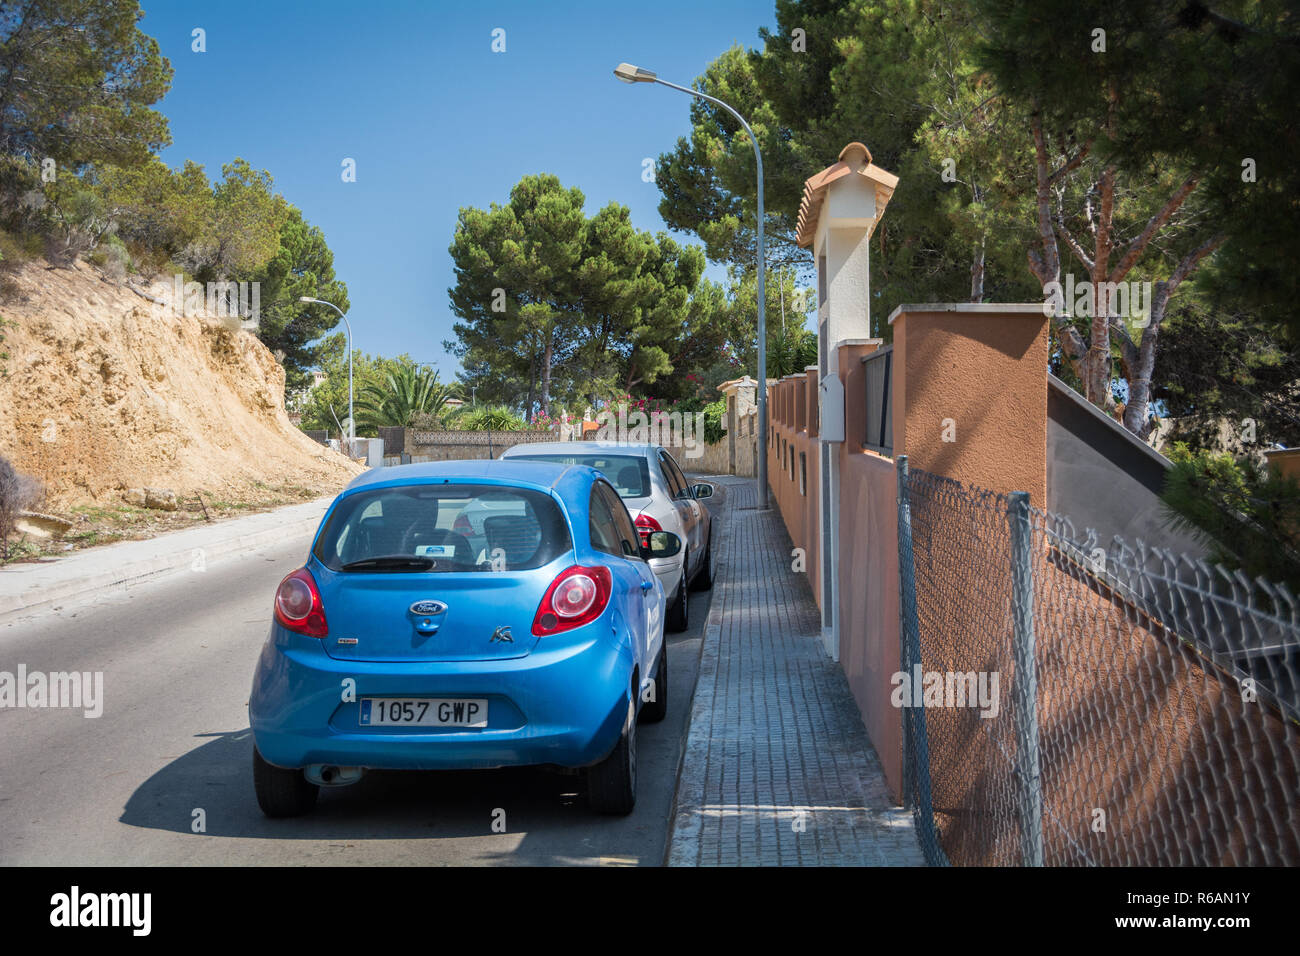 Santa Ponsa, Mallorca, Spain - July 18, 2013: Car Ford Ka parked on the road Stock Photo